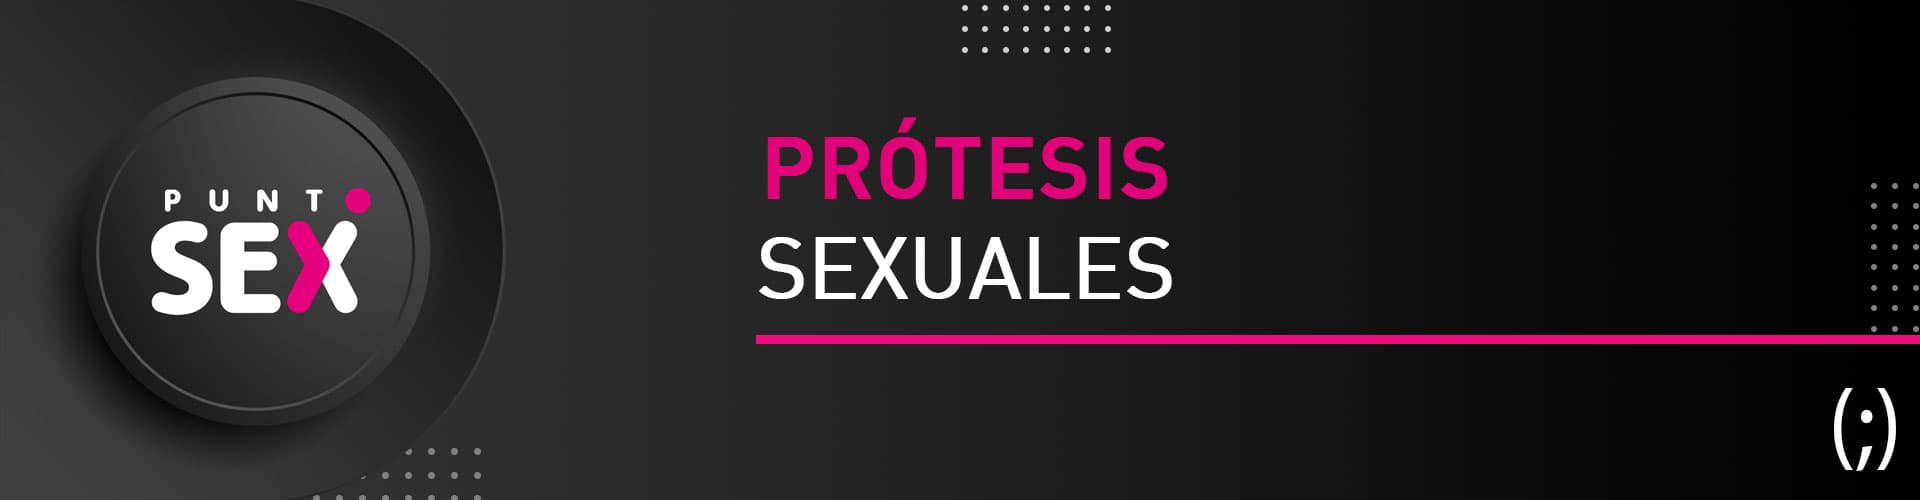 Prótesis sexuales en Punto Sex Shop